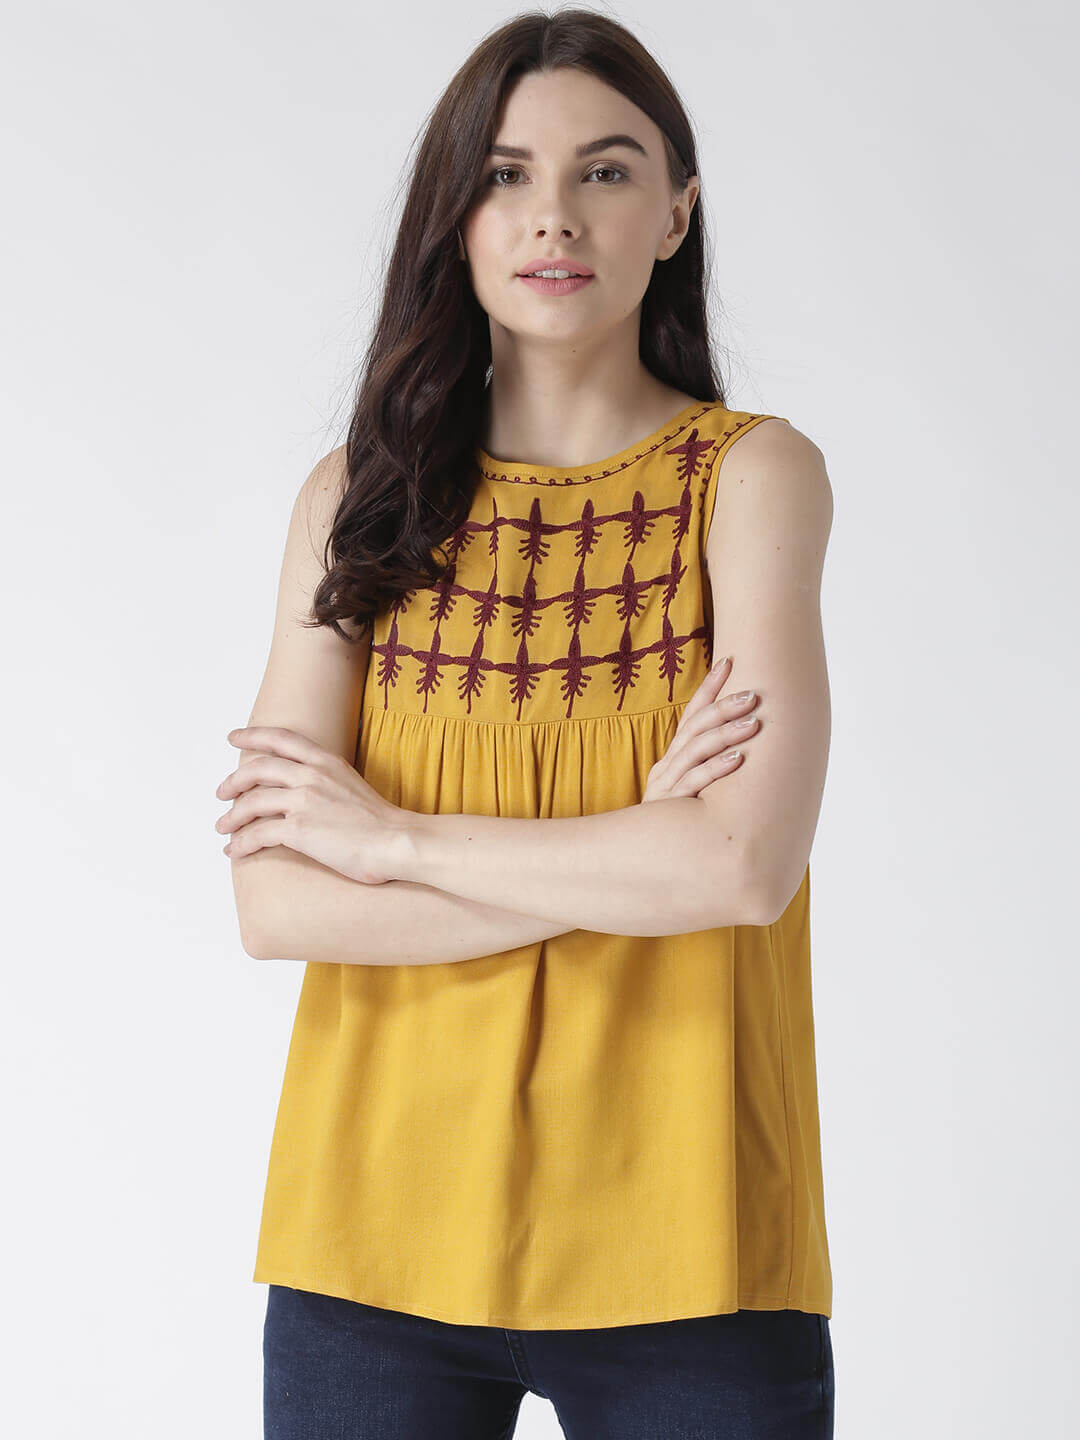 Msfq Women'S Sleeveless Yellow Top With Embroidered Yoke